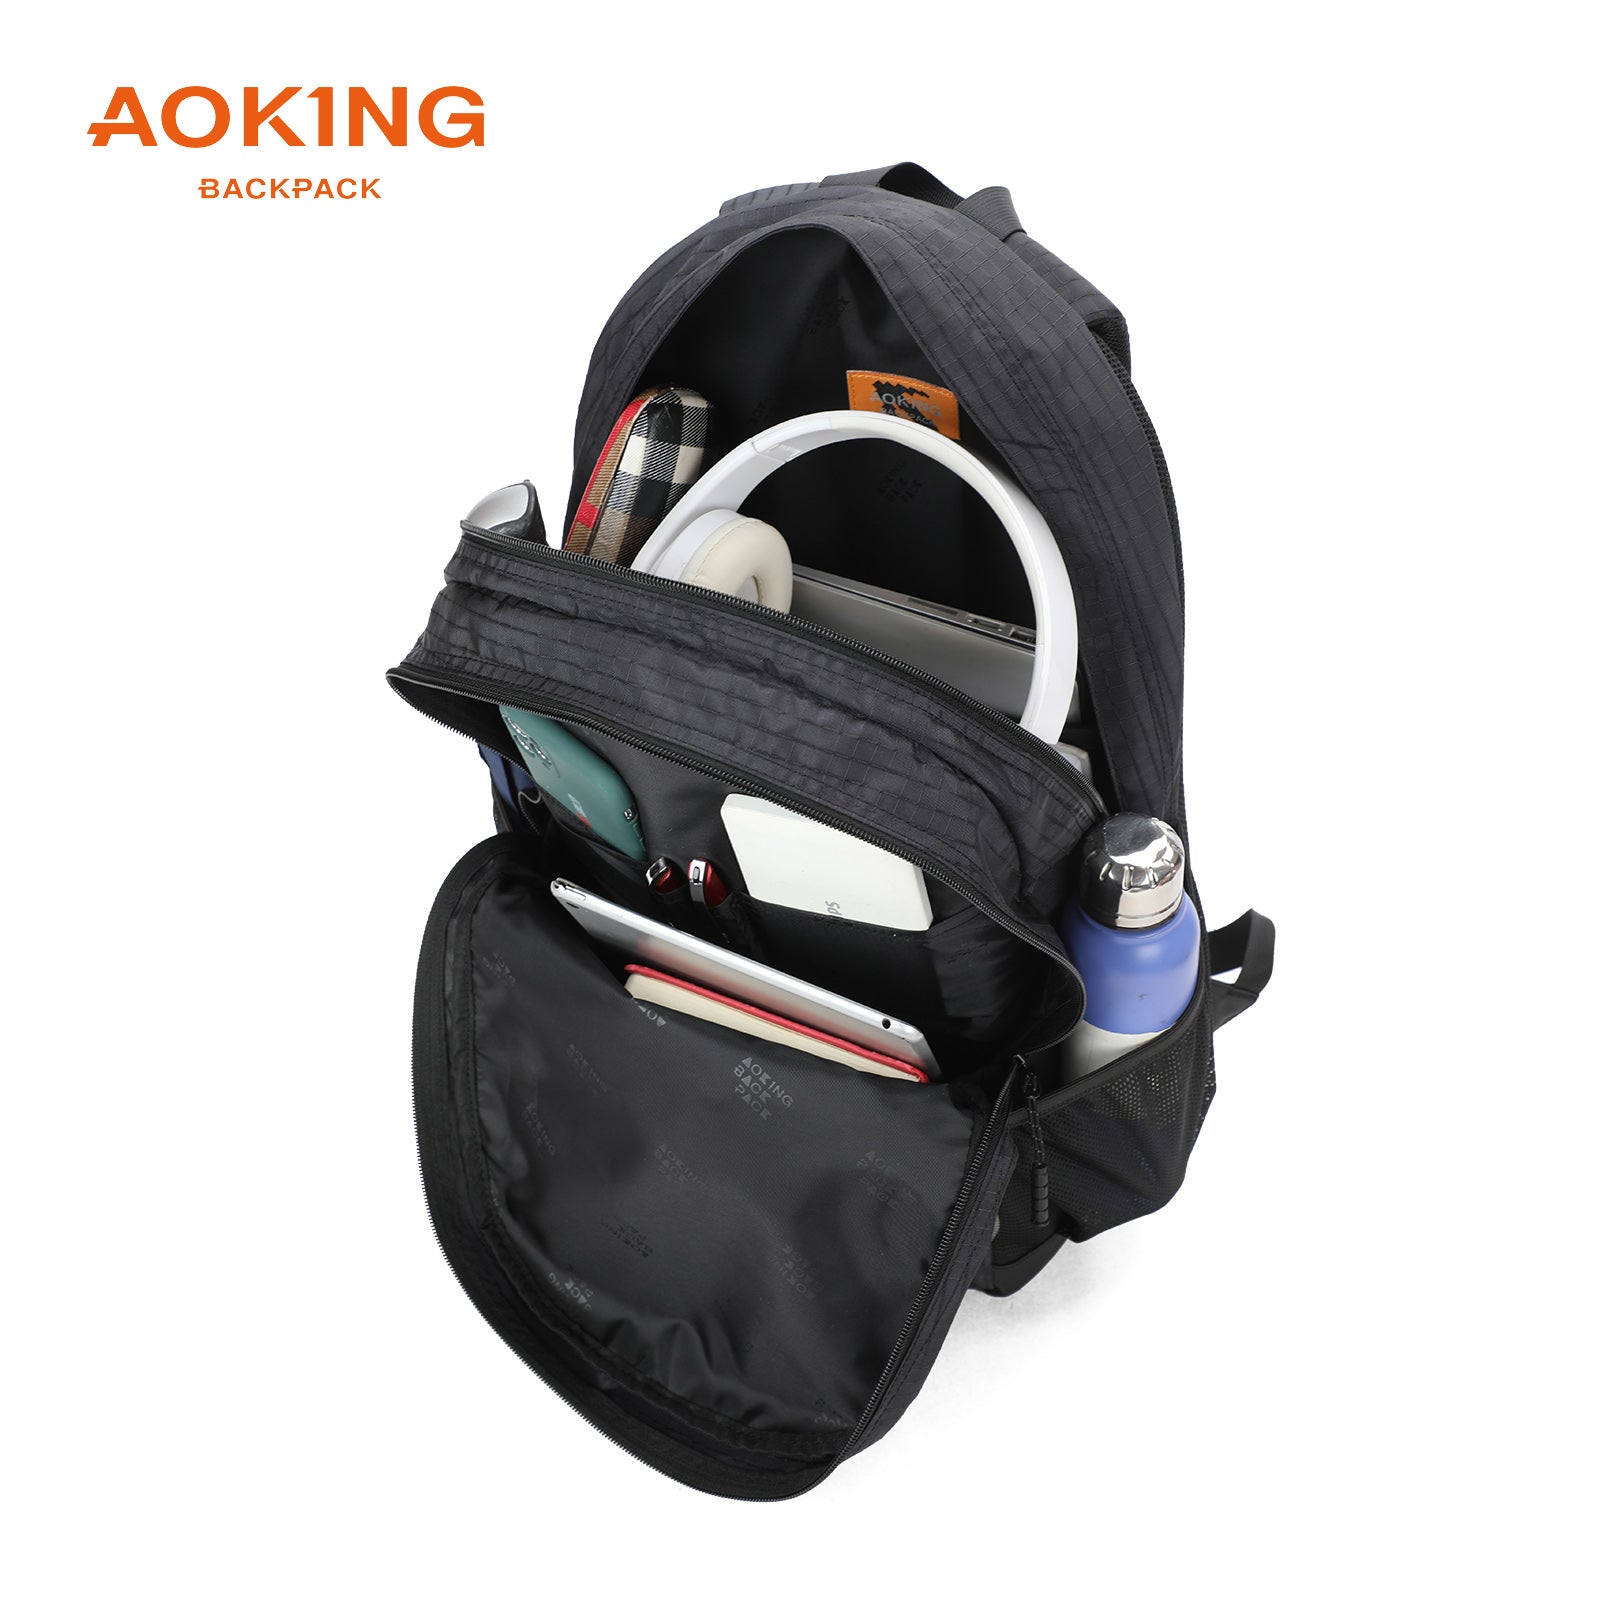 Aoking Backpack Black Casual Backpack Student Bag XN3378